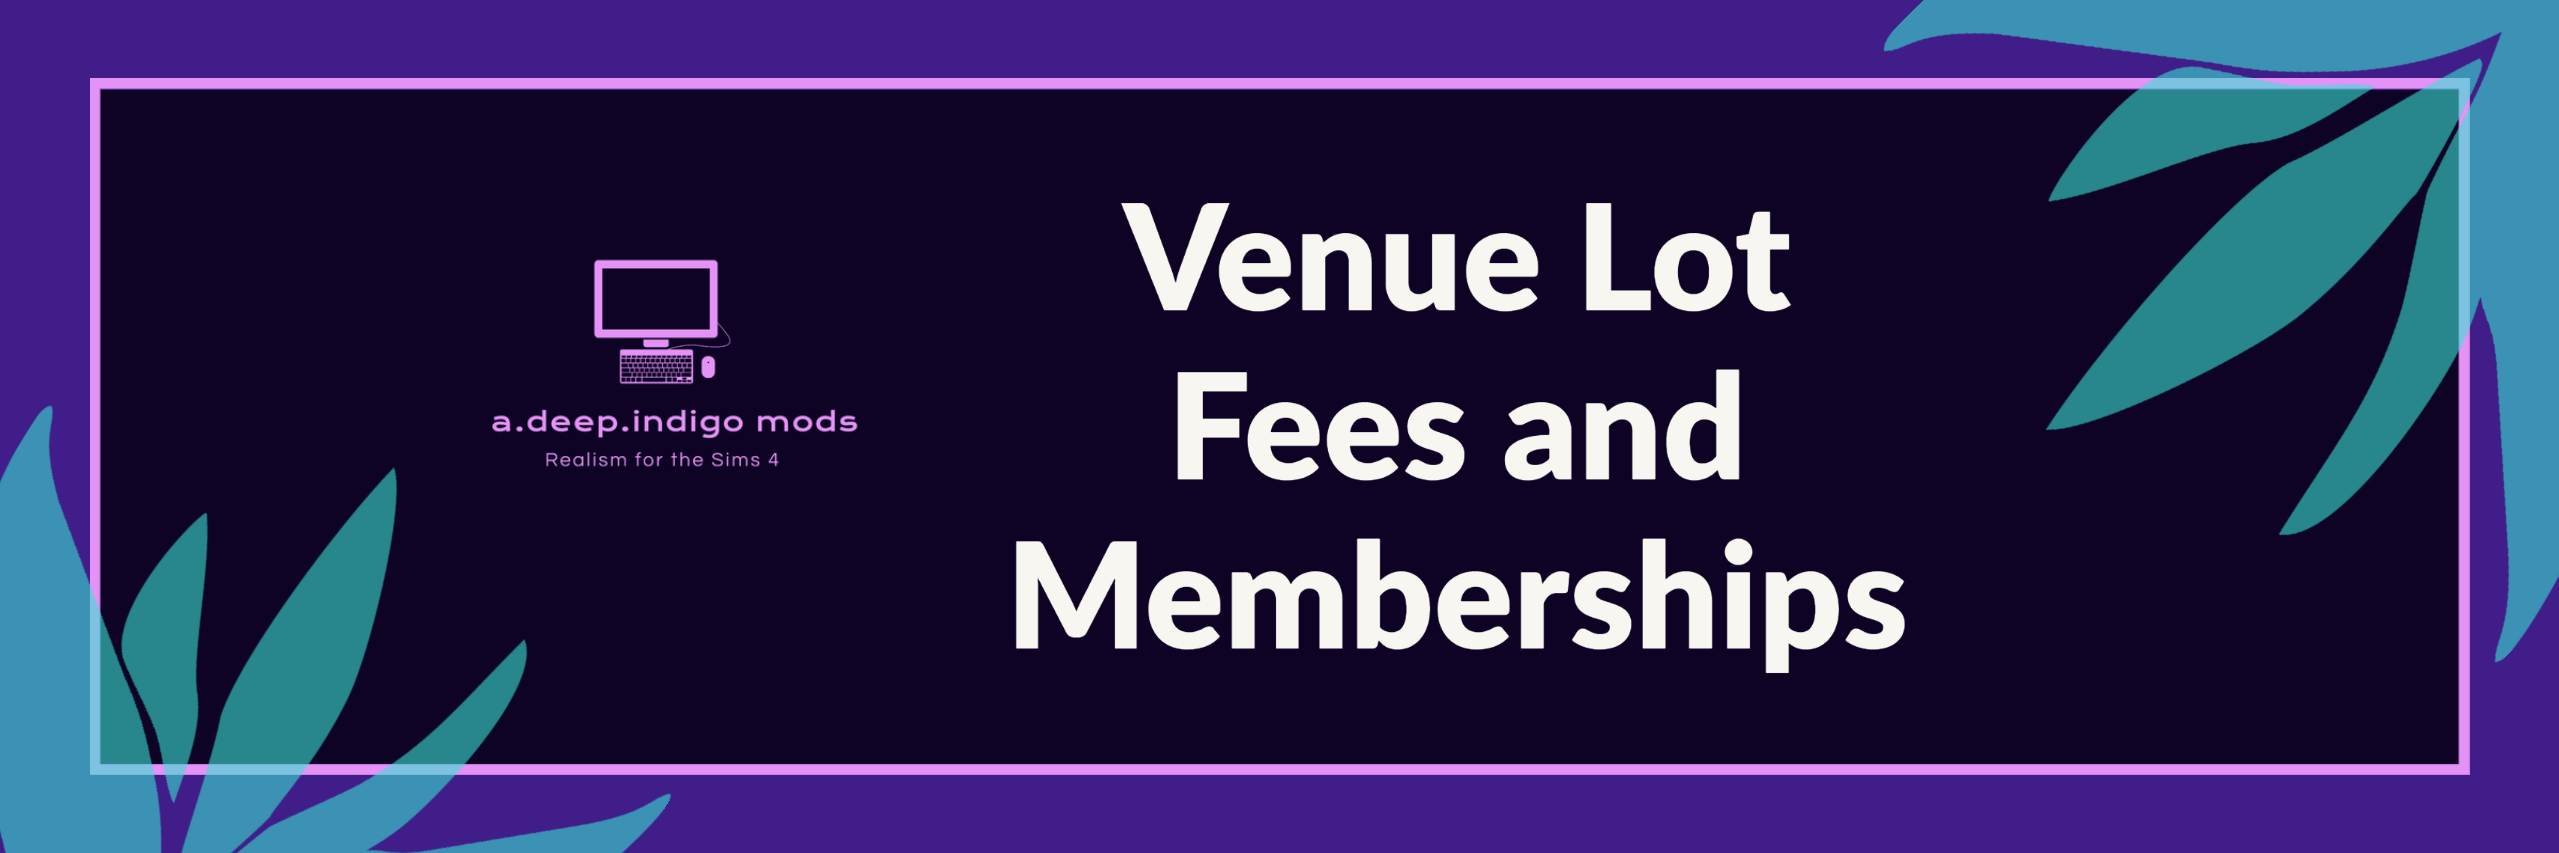 Venue Lot Fees and Memberships